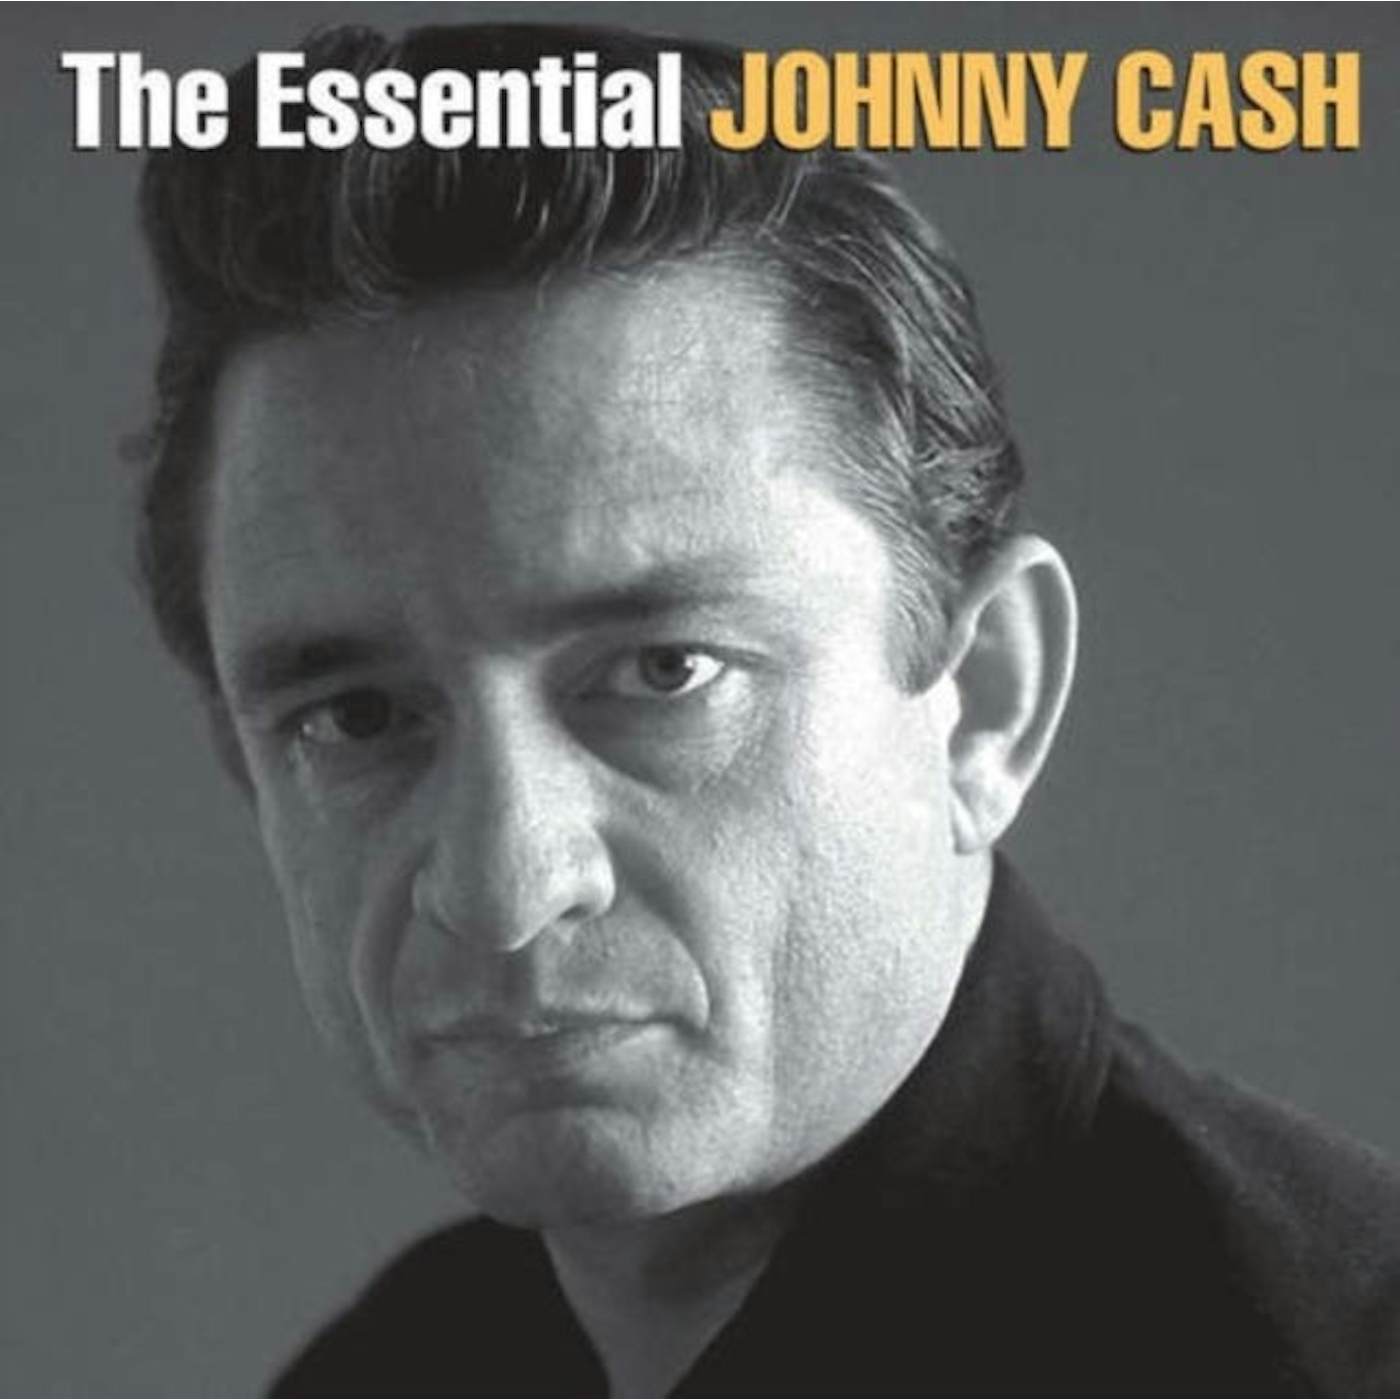 Johnny Cash LP Vinyl Record - The Essential